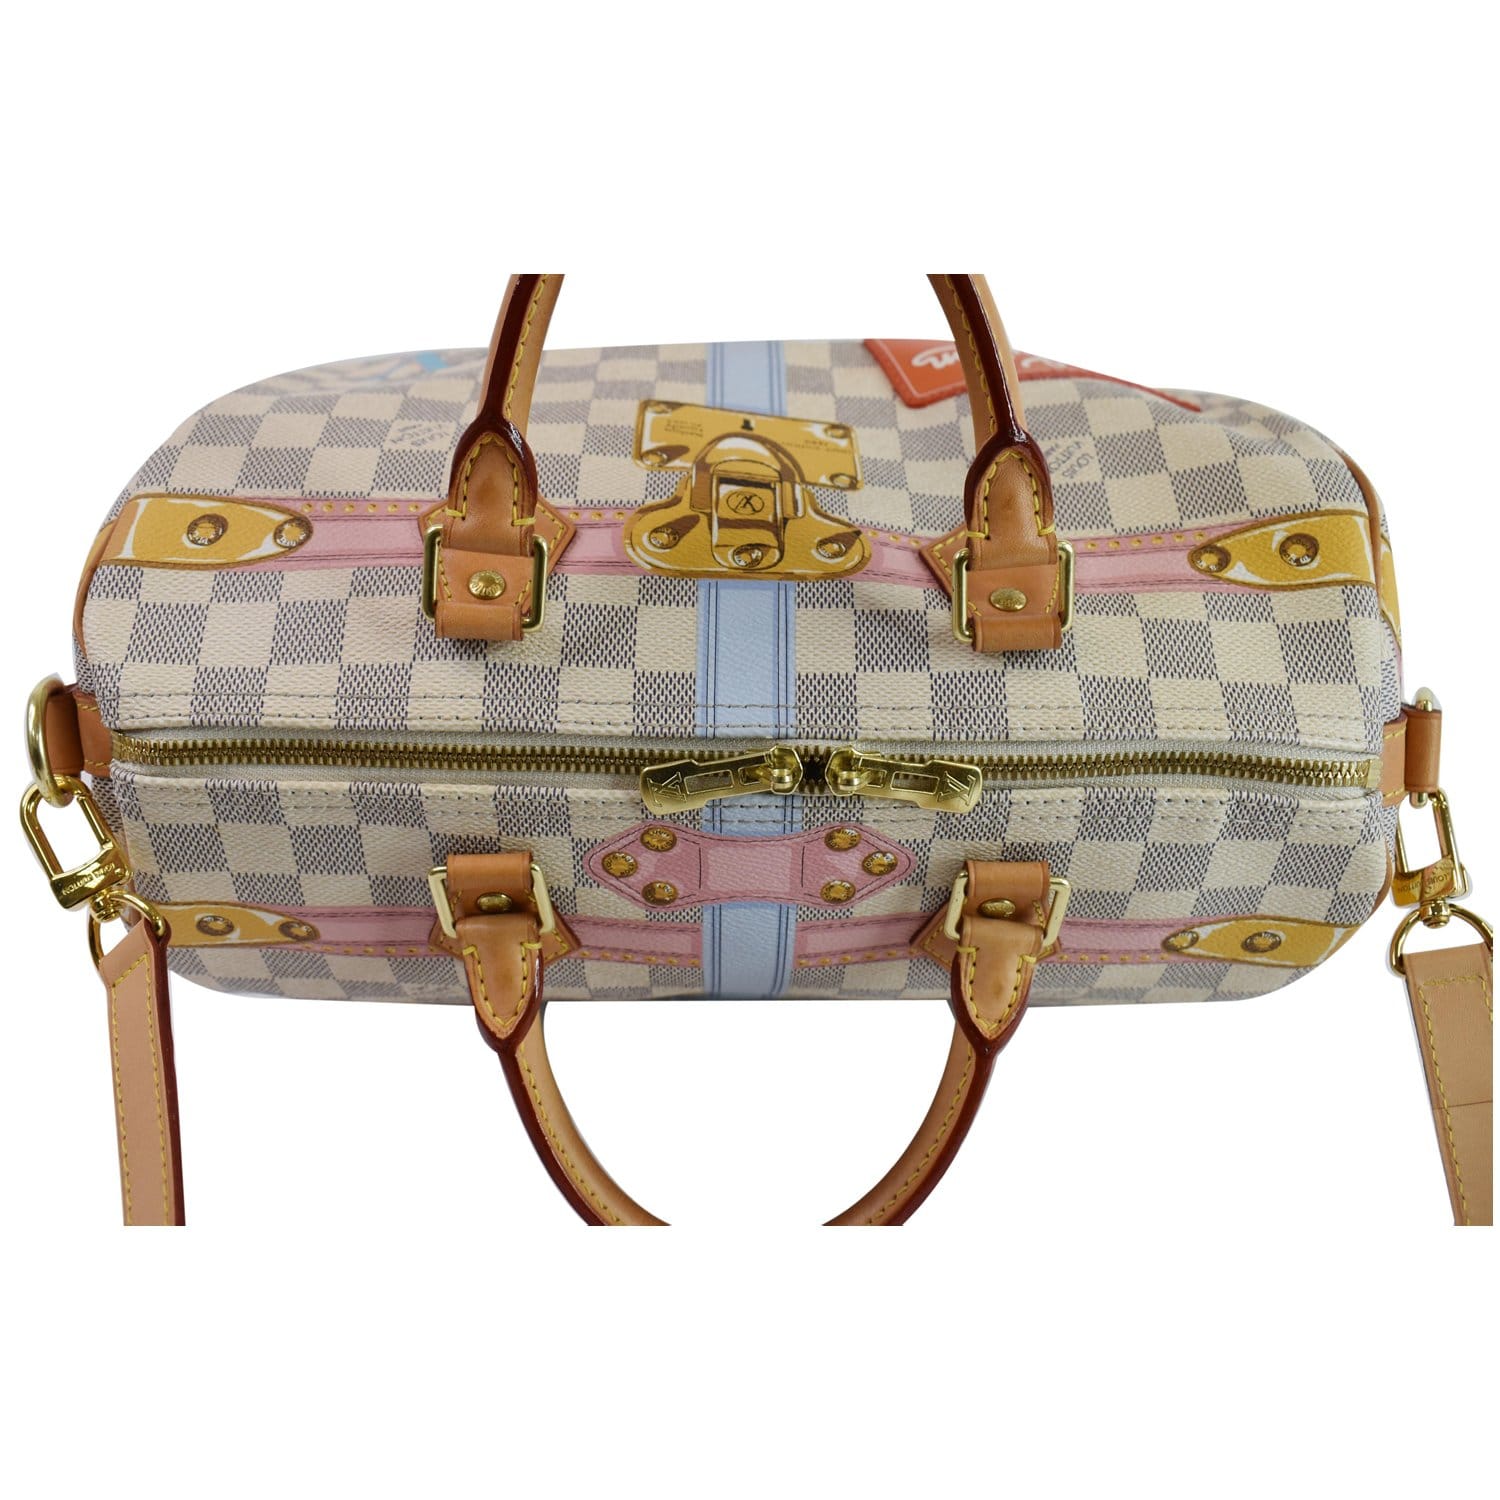 Louis Vuitton Speedy Bandouliere Bag Limited Edition Summer Trunks